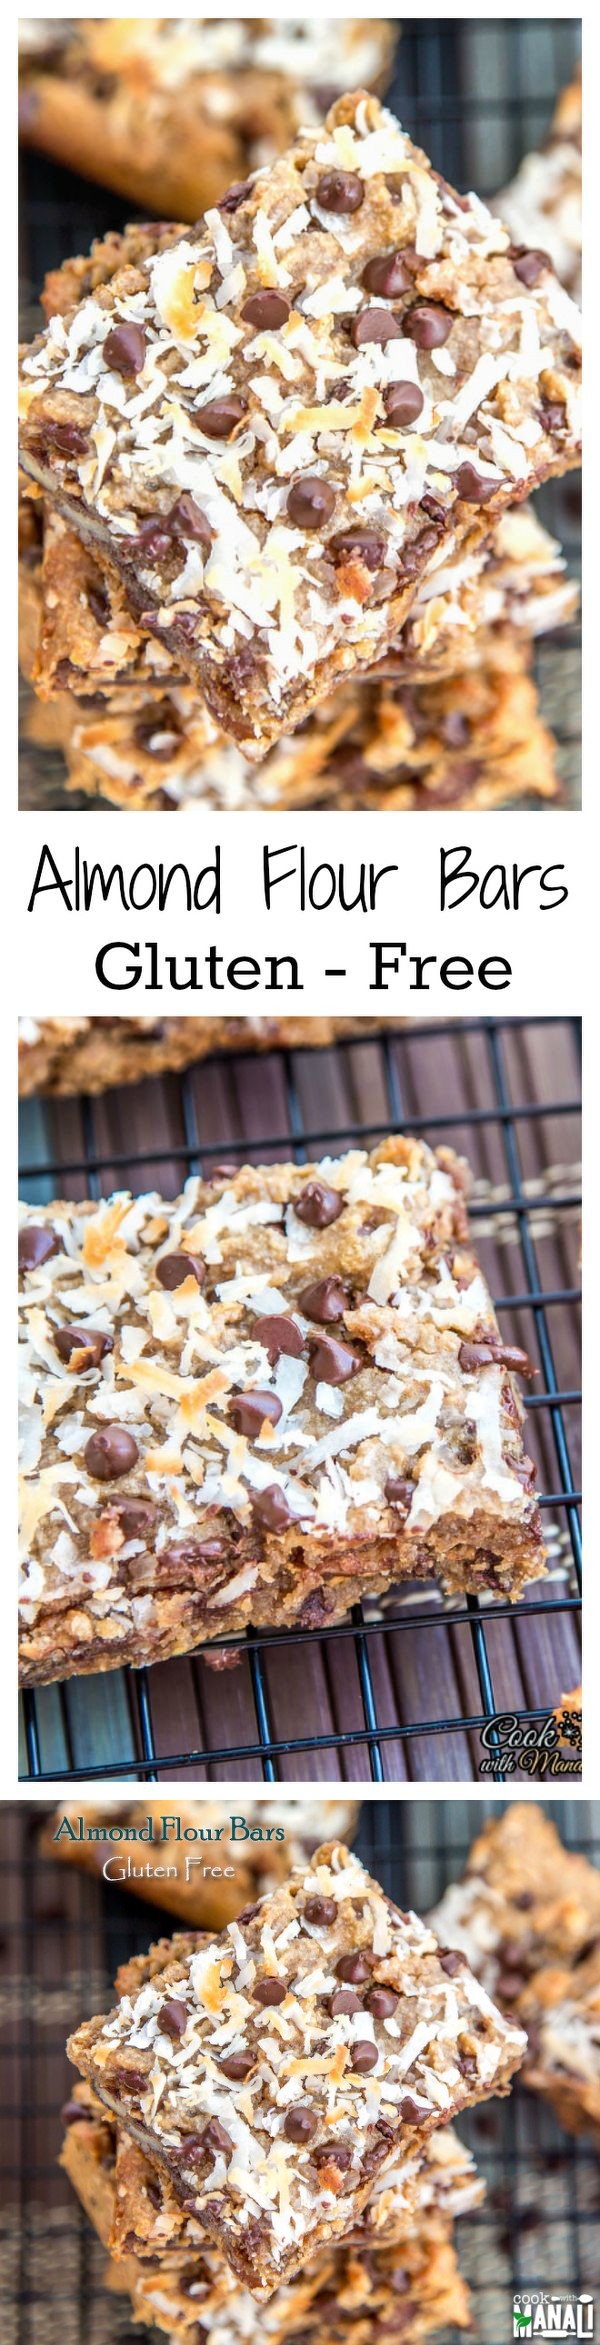 Almond Flour Bars - Gluten Free Bars